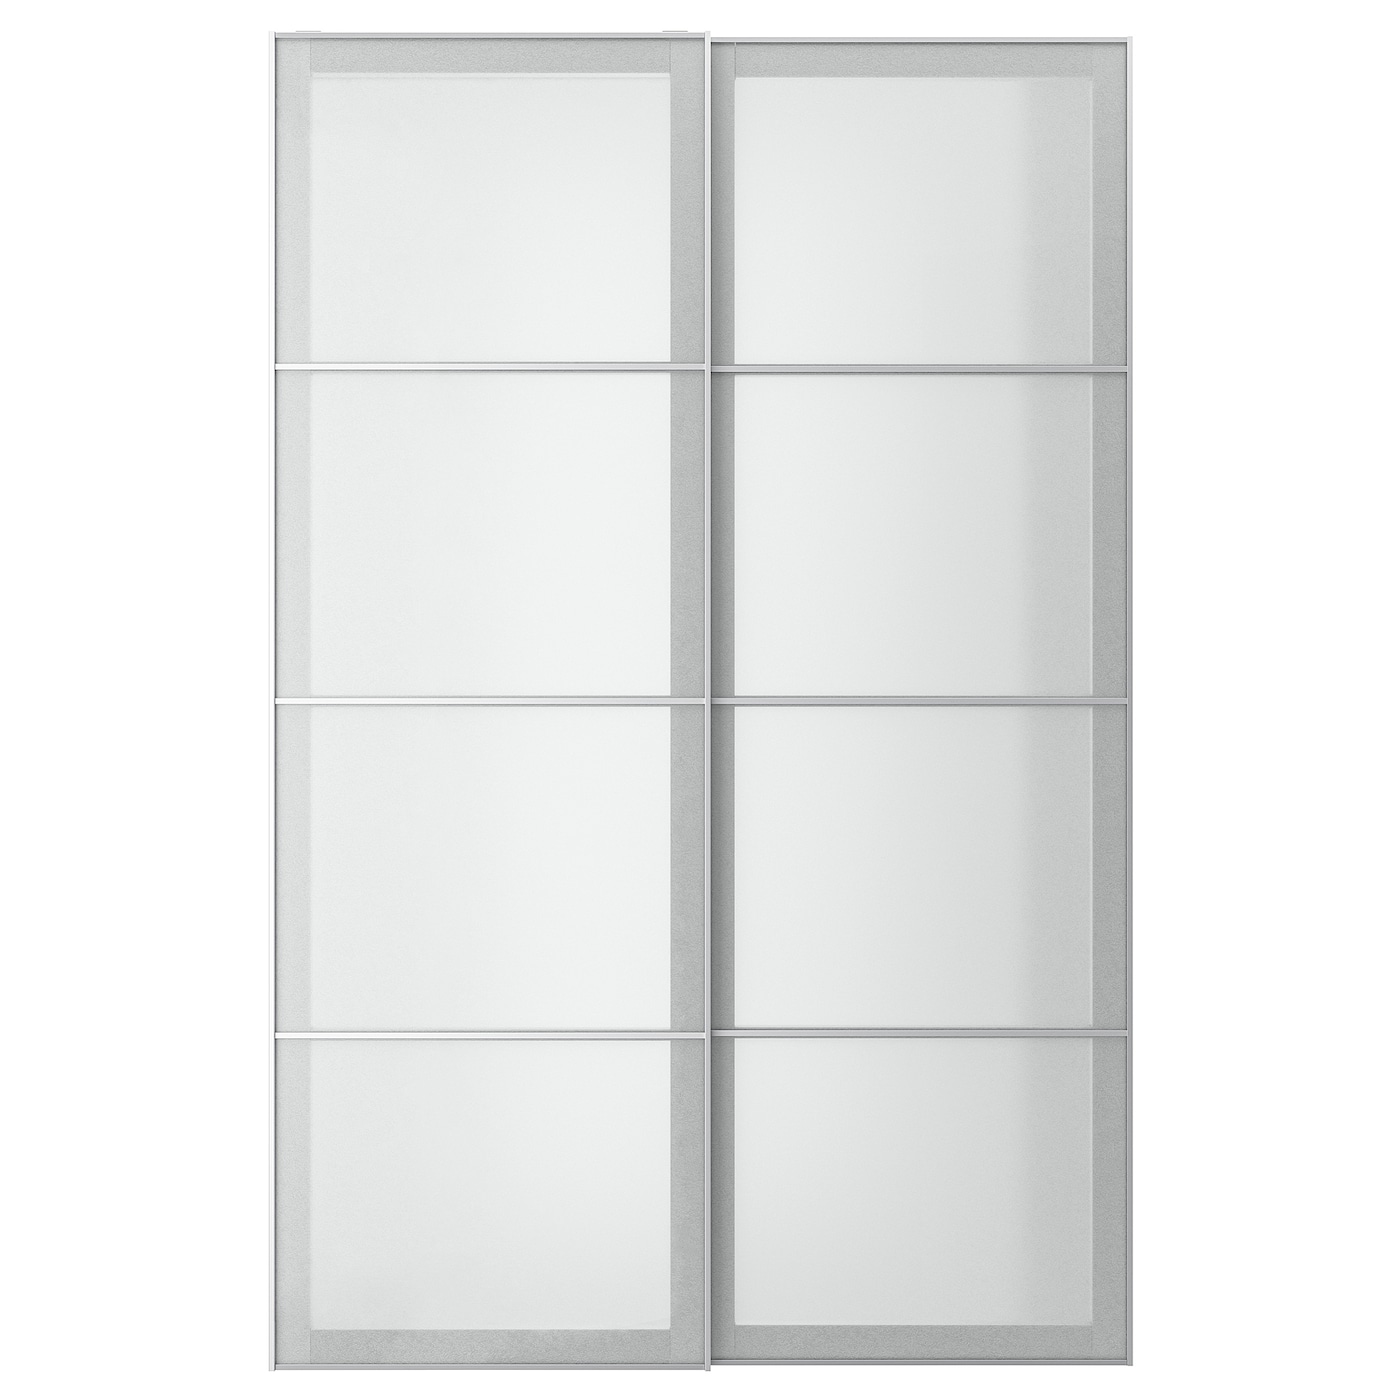 Пара раздвижных дверных рам - IKEA SVARTISDAL/СВАРТИСДАЛЬ ИКЕА, 150х236 см, серый